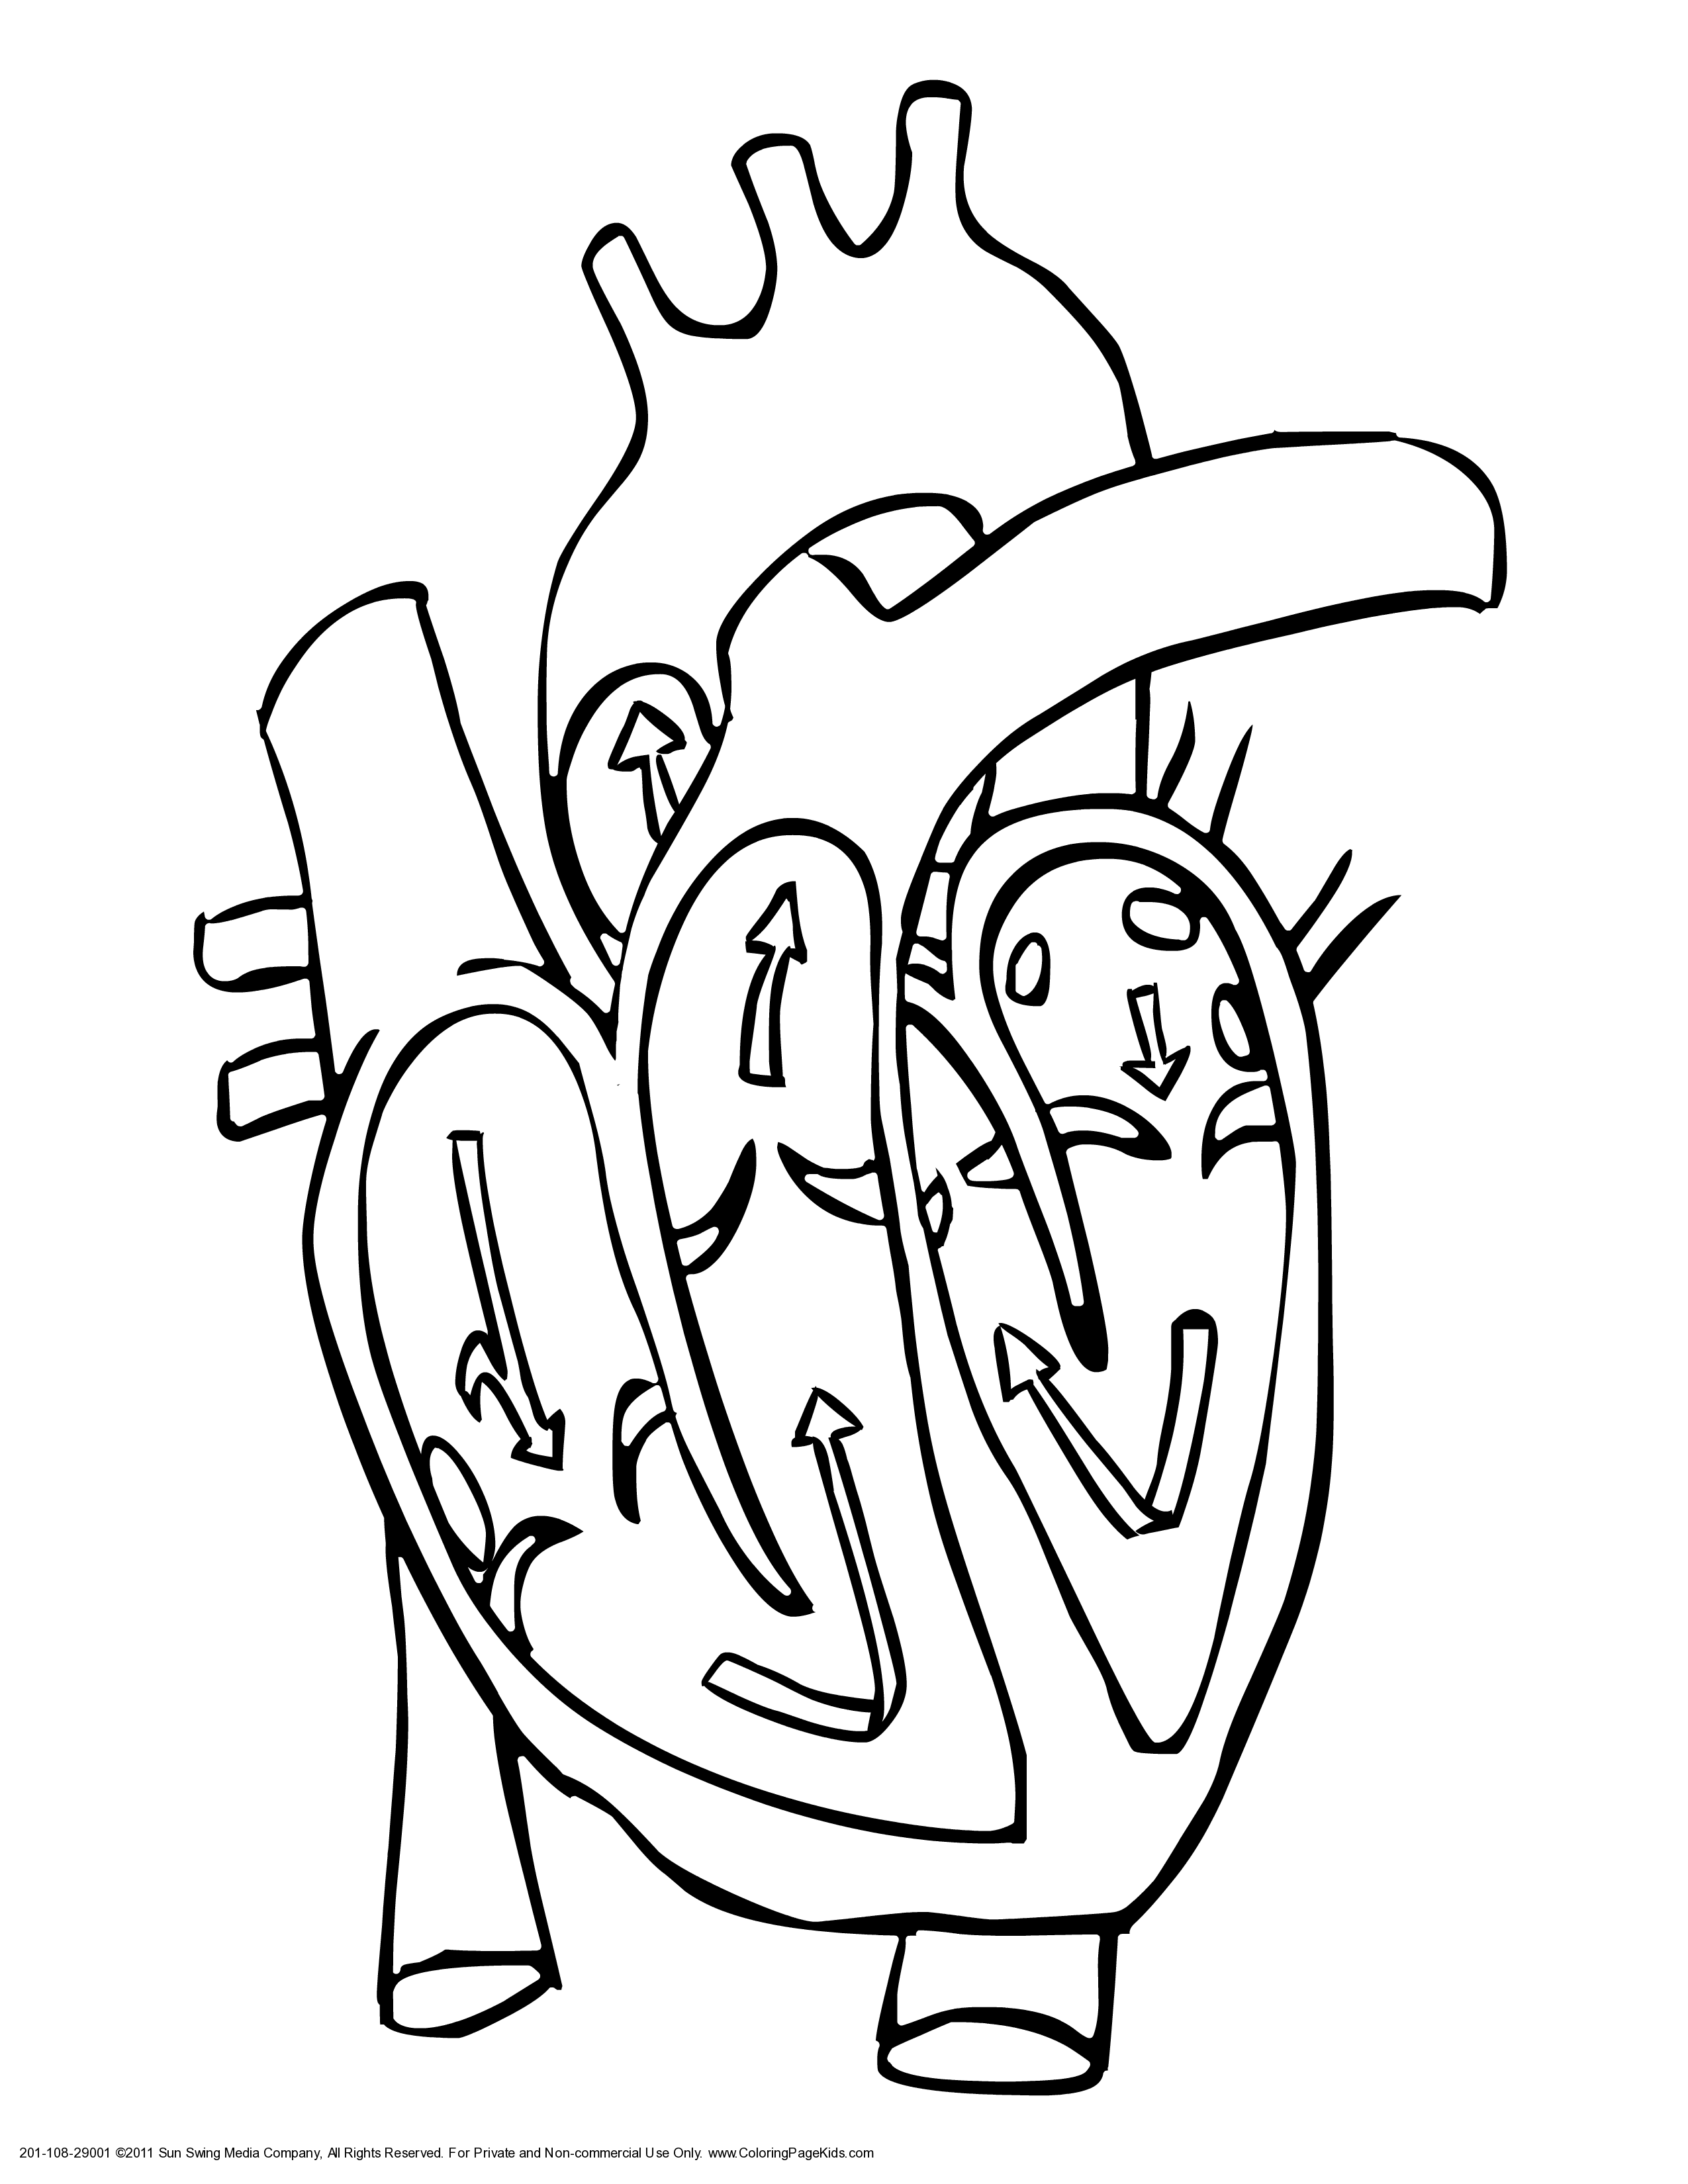 Human Heart Diagram Unlabeled - ClipArt Best - ClipArt Best